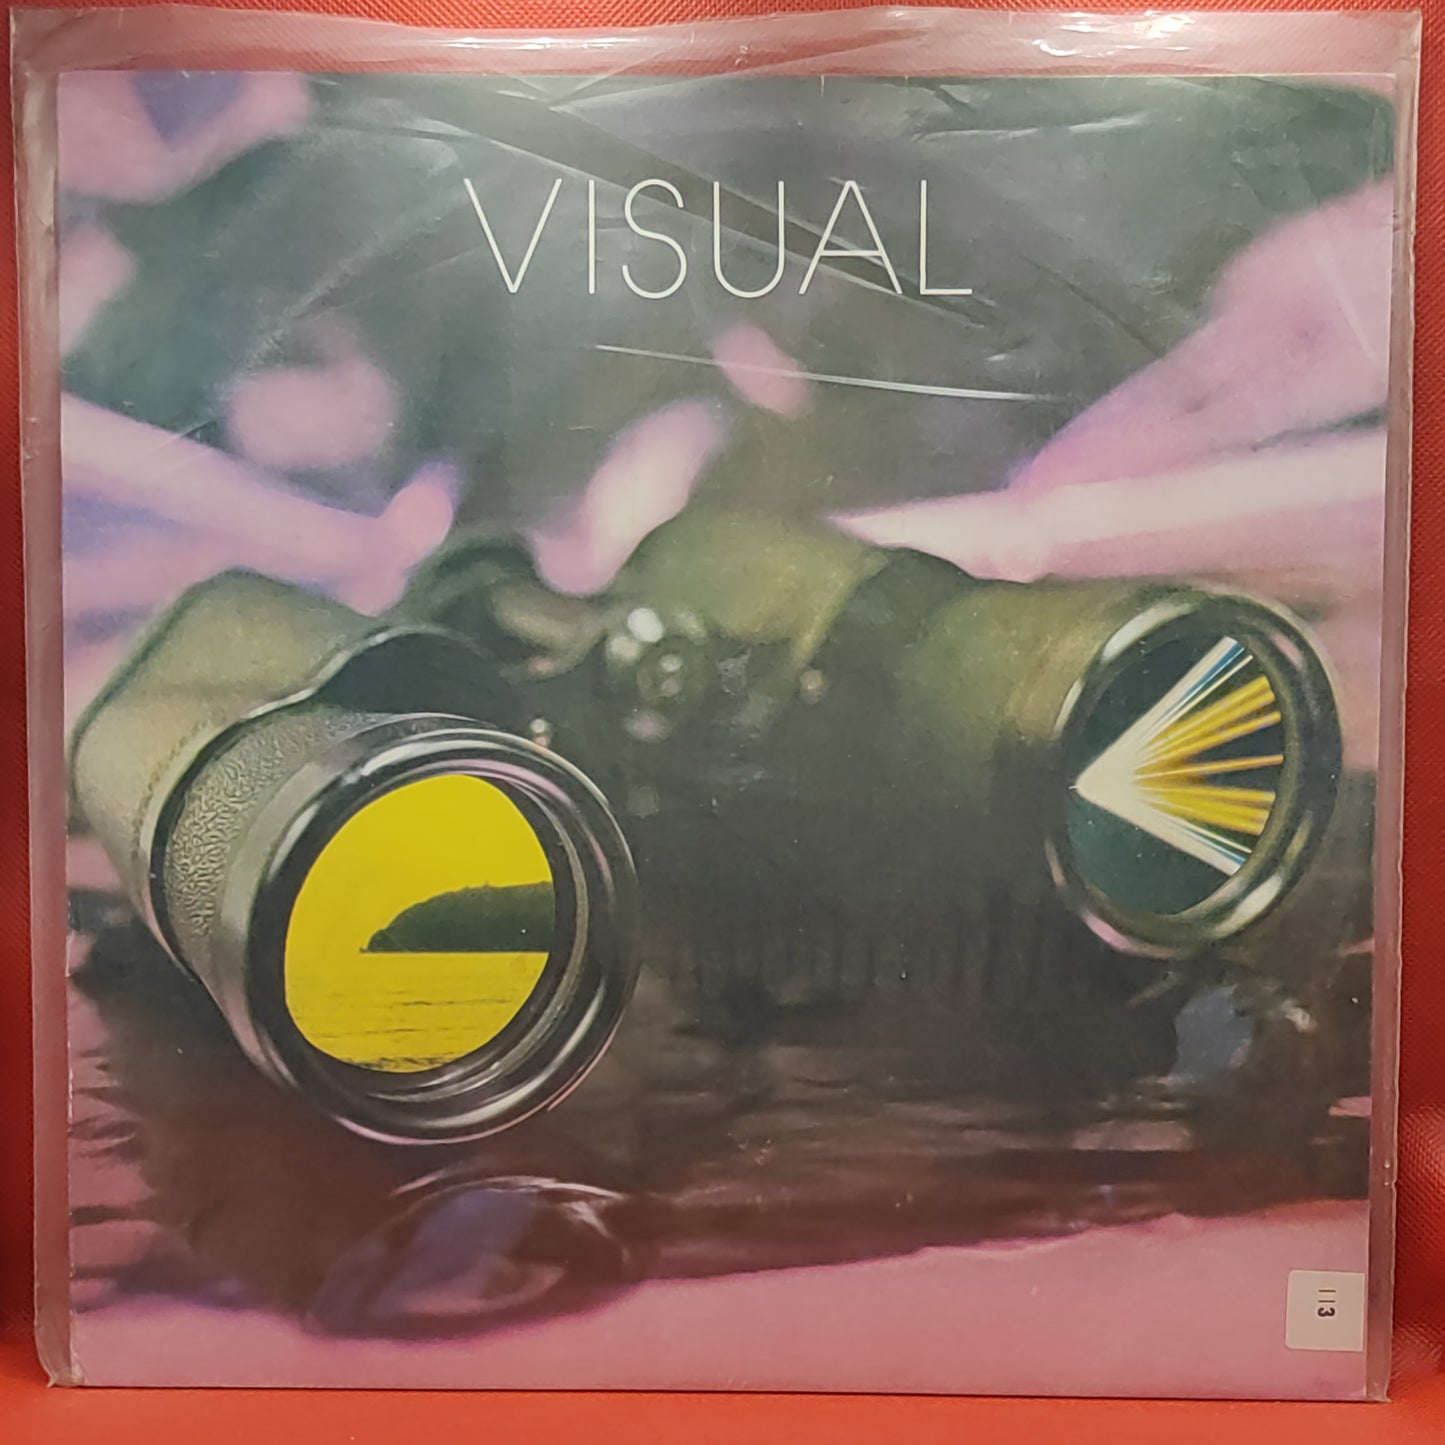 Visual – The Music Got Me